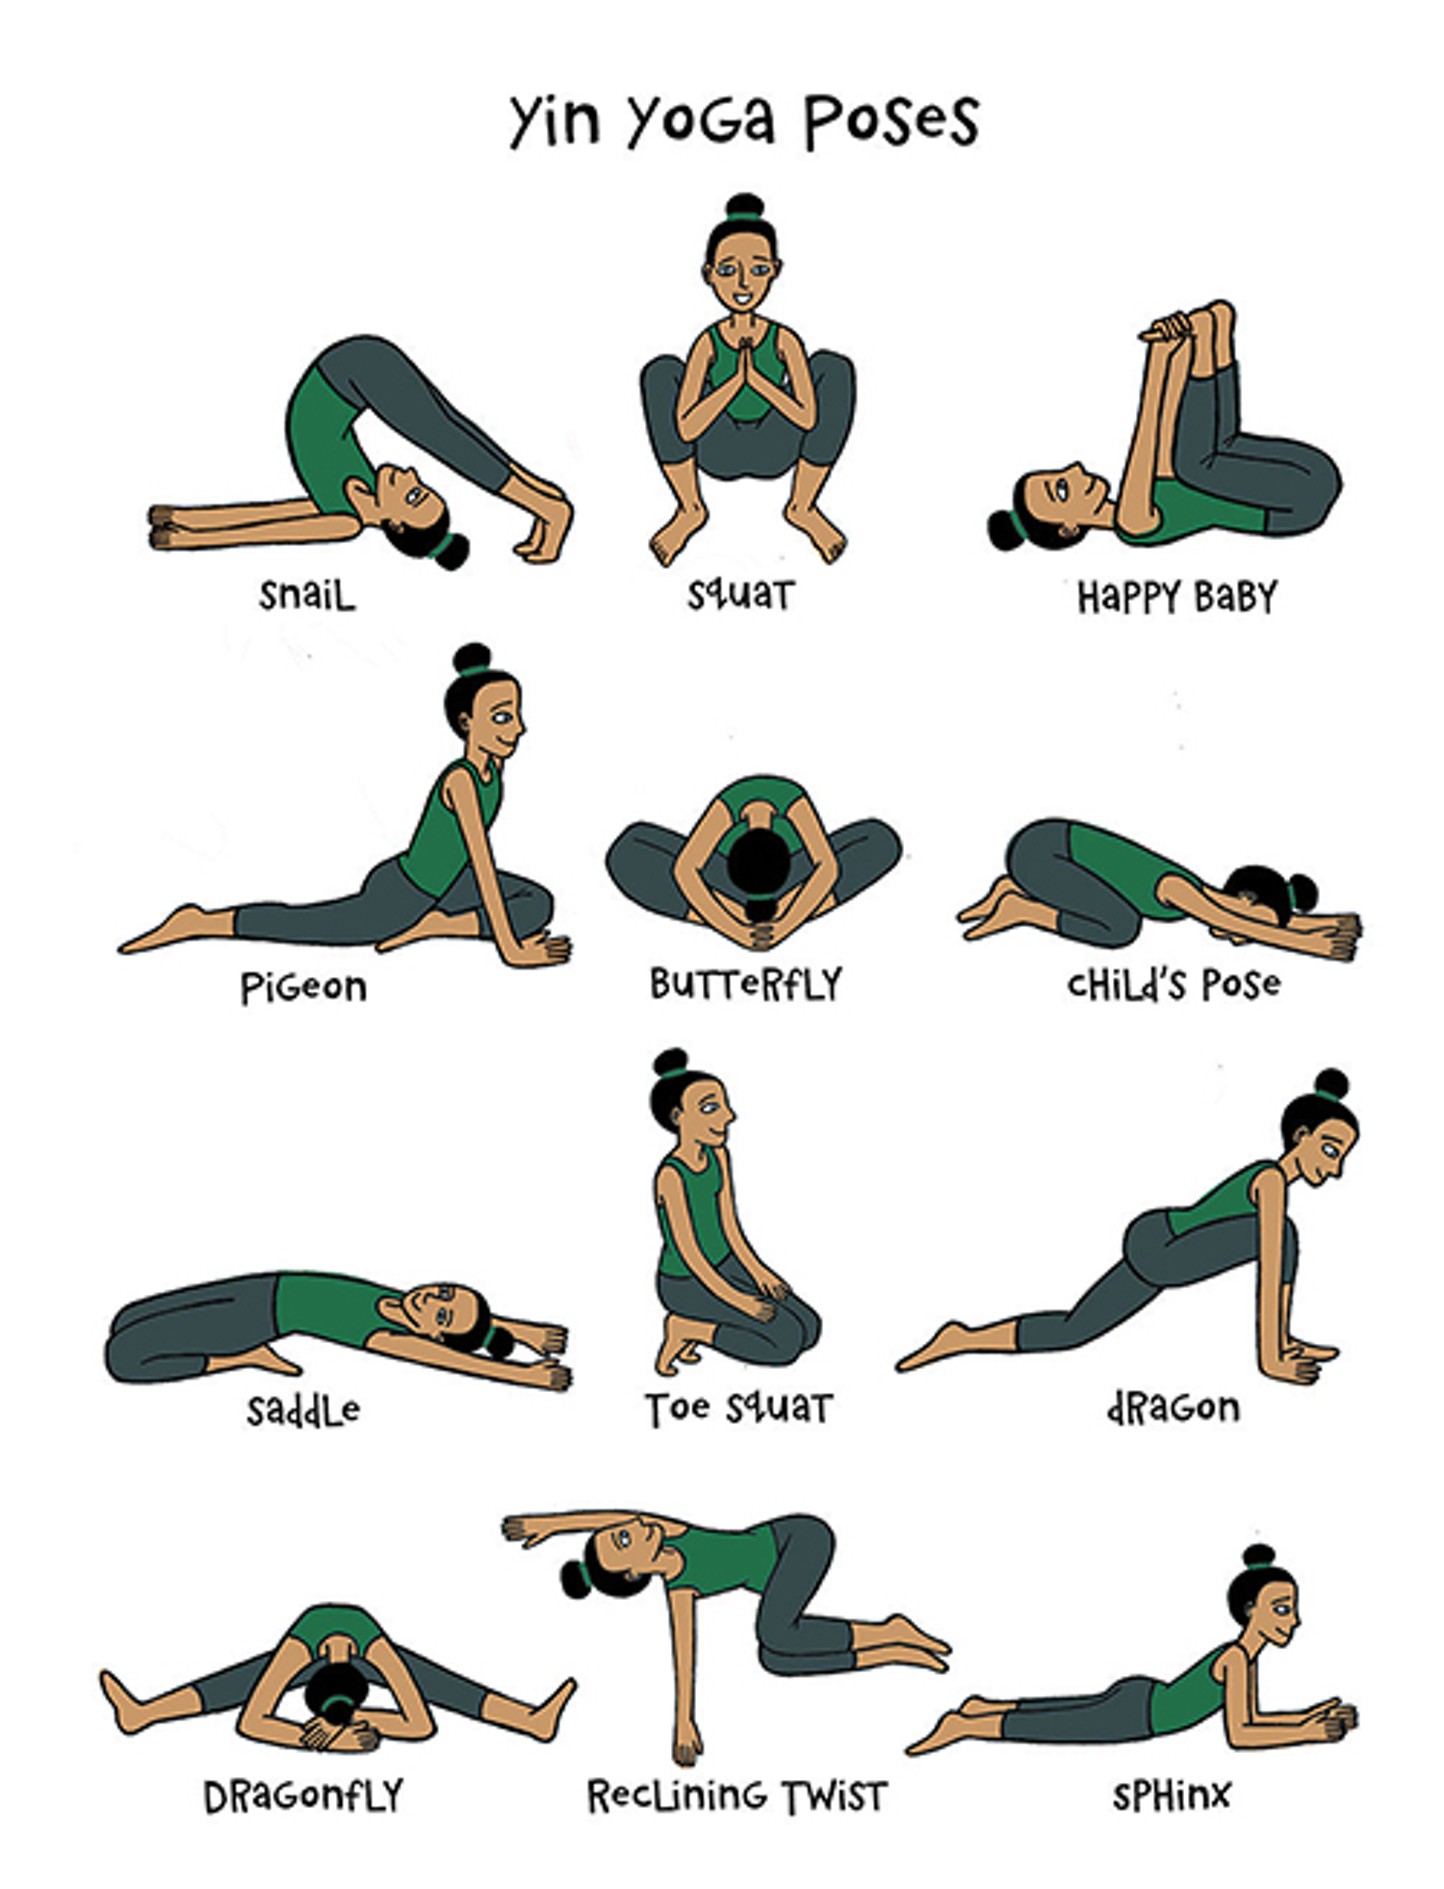 yin yoga pose - Yin Yoga Sequence and Benefits of Yin Yoga